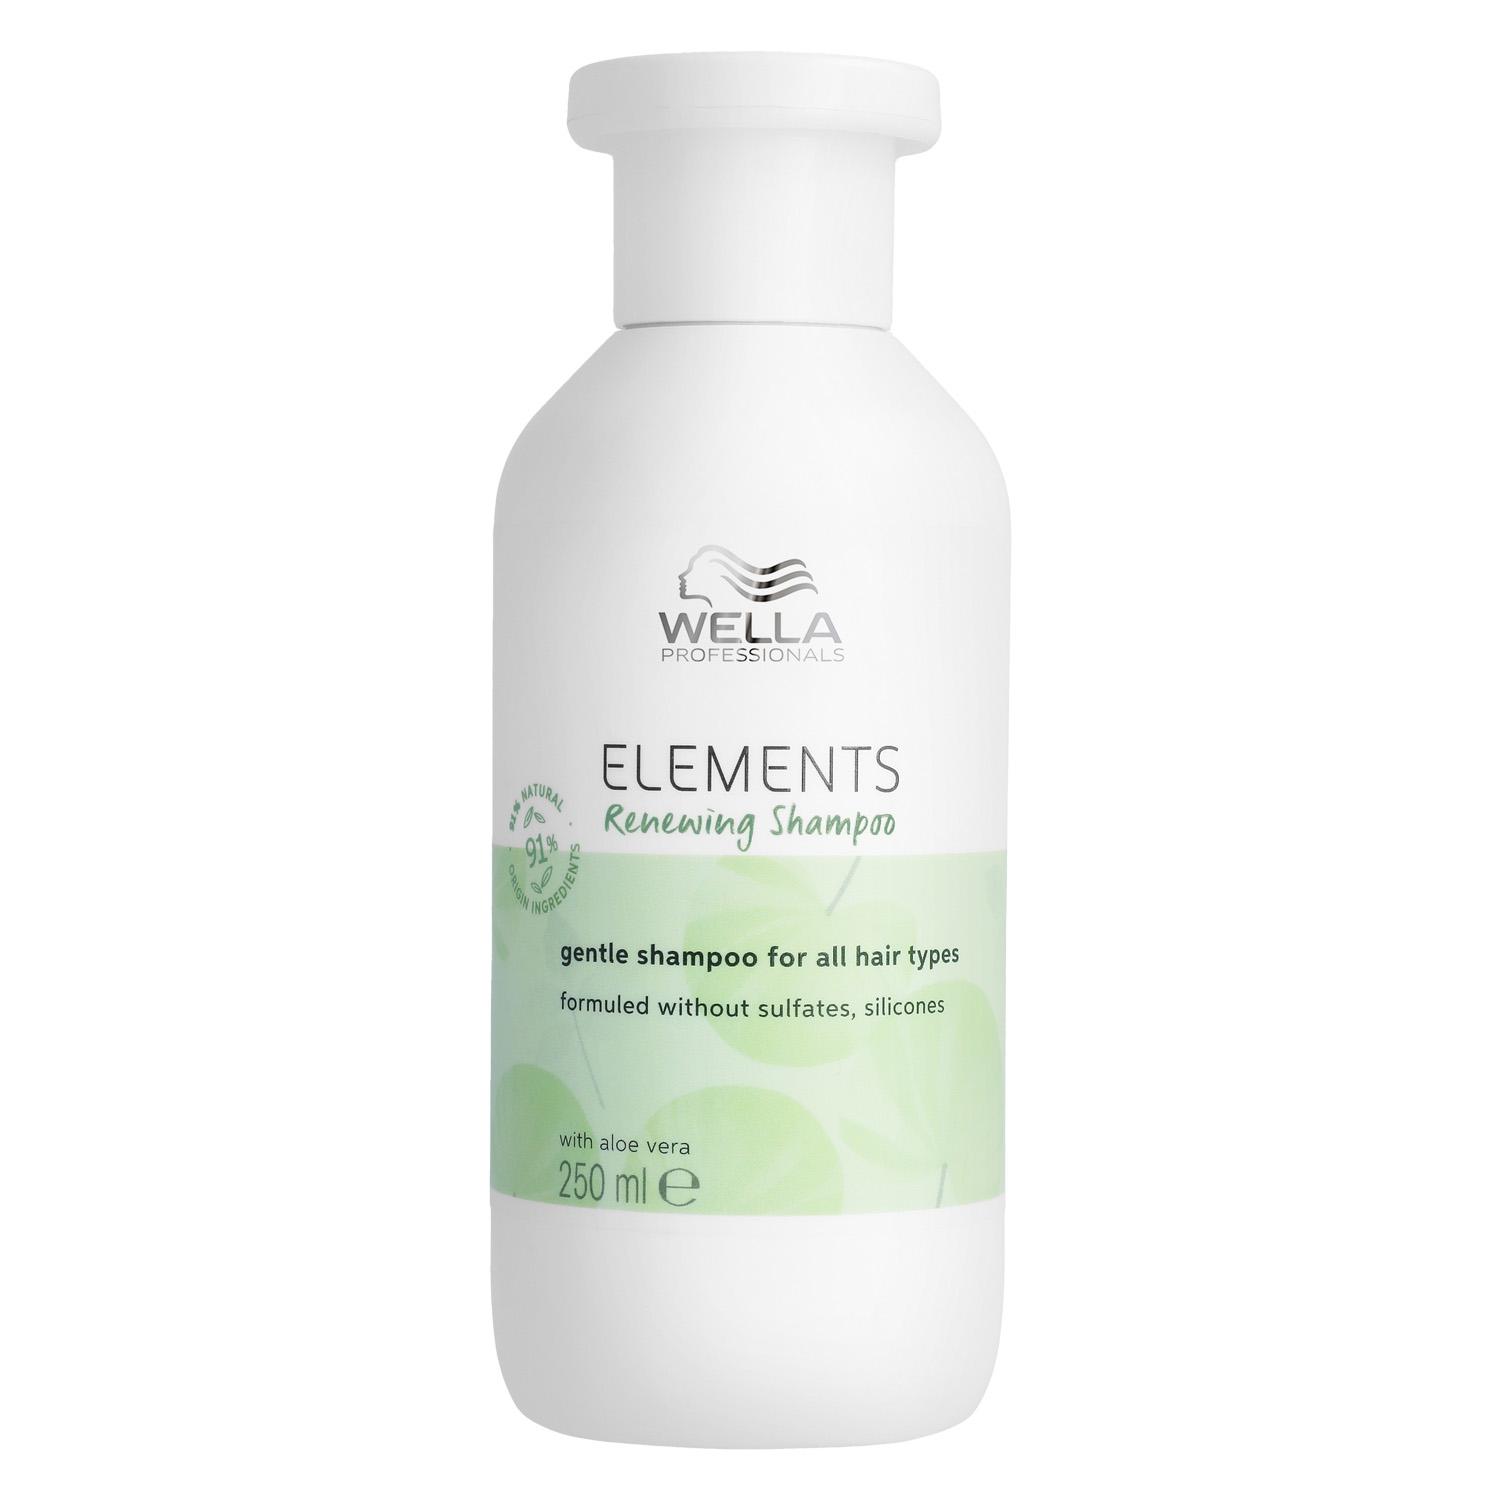 Elements - Renewing Shampoo